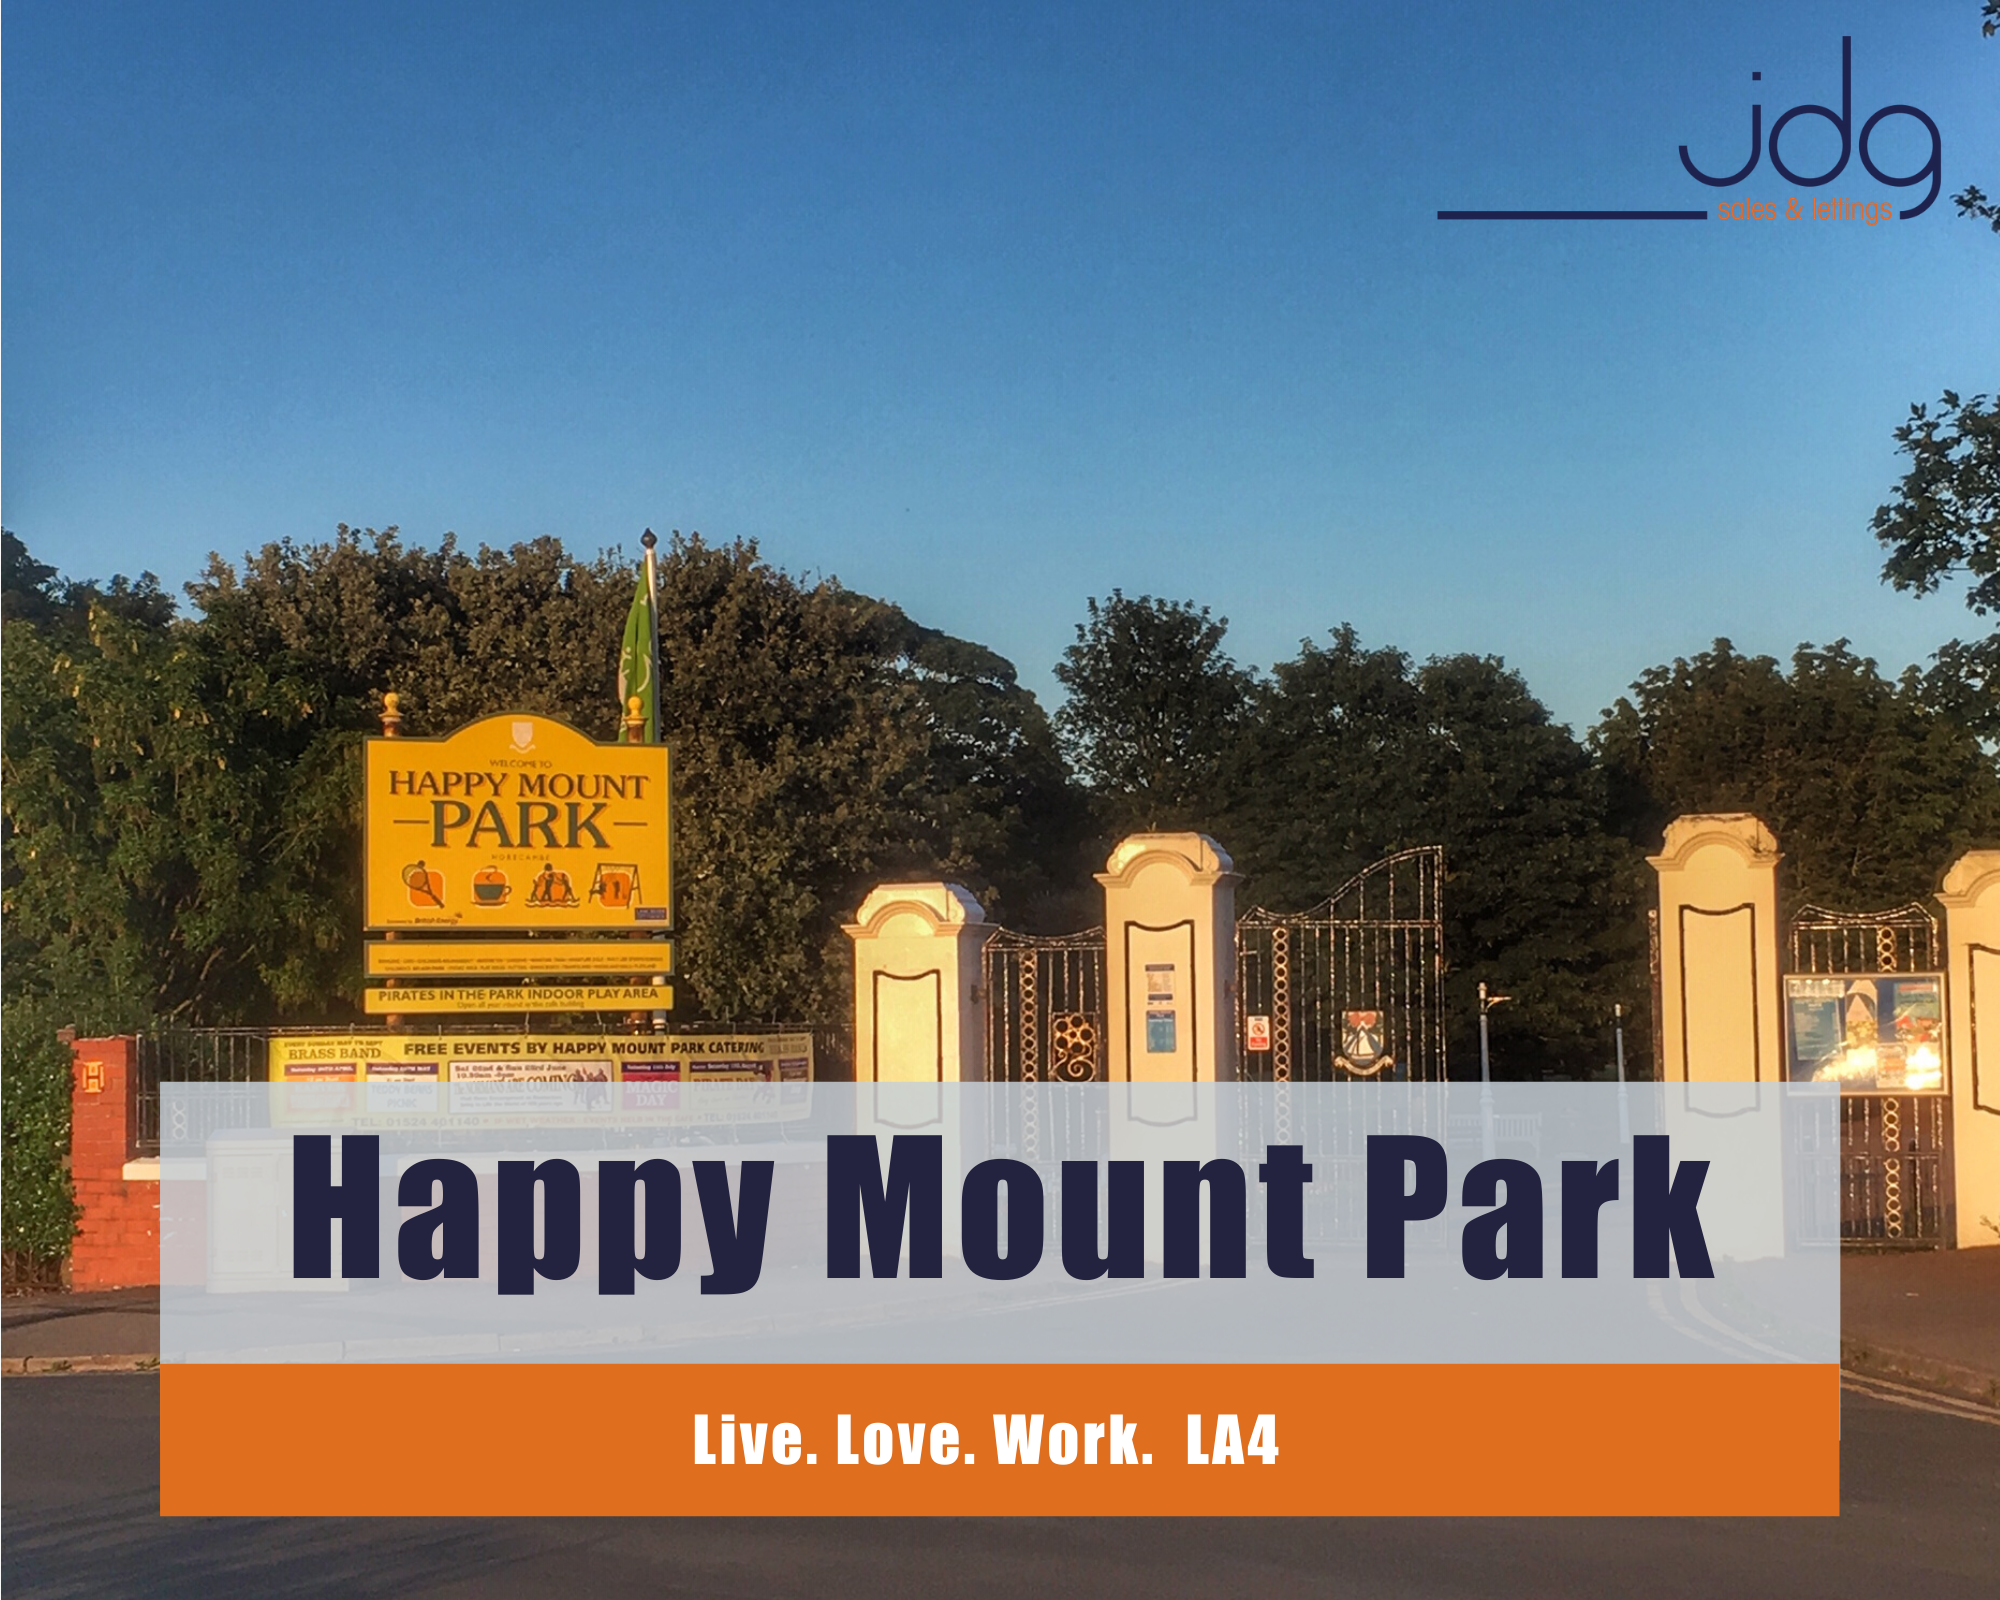 Discover Happy Mount Park in LA4